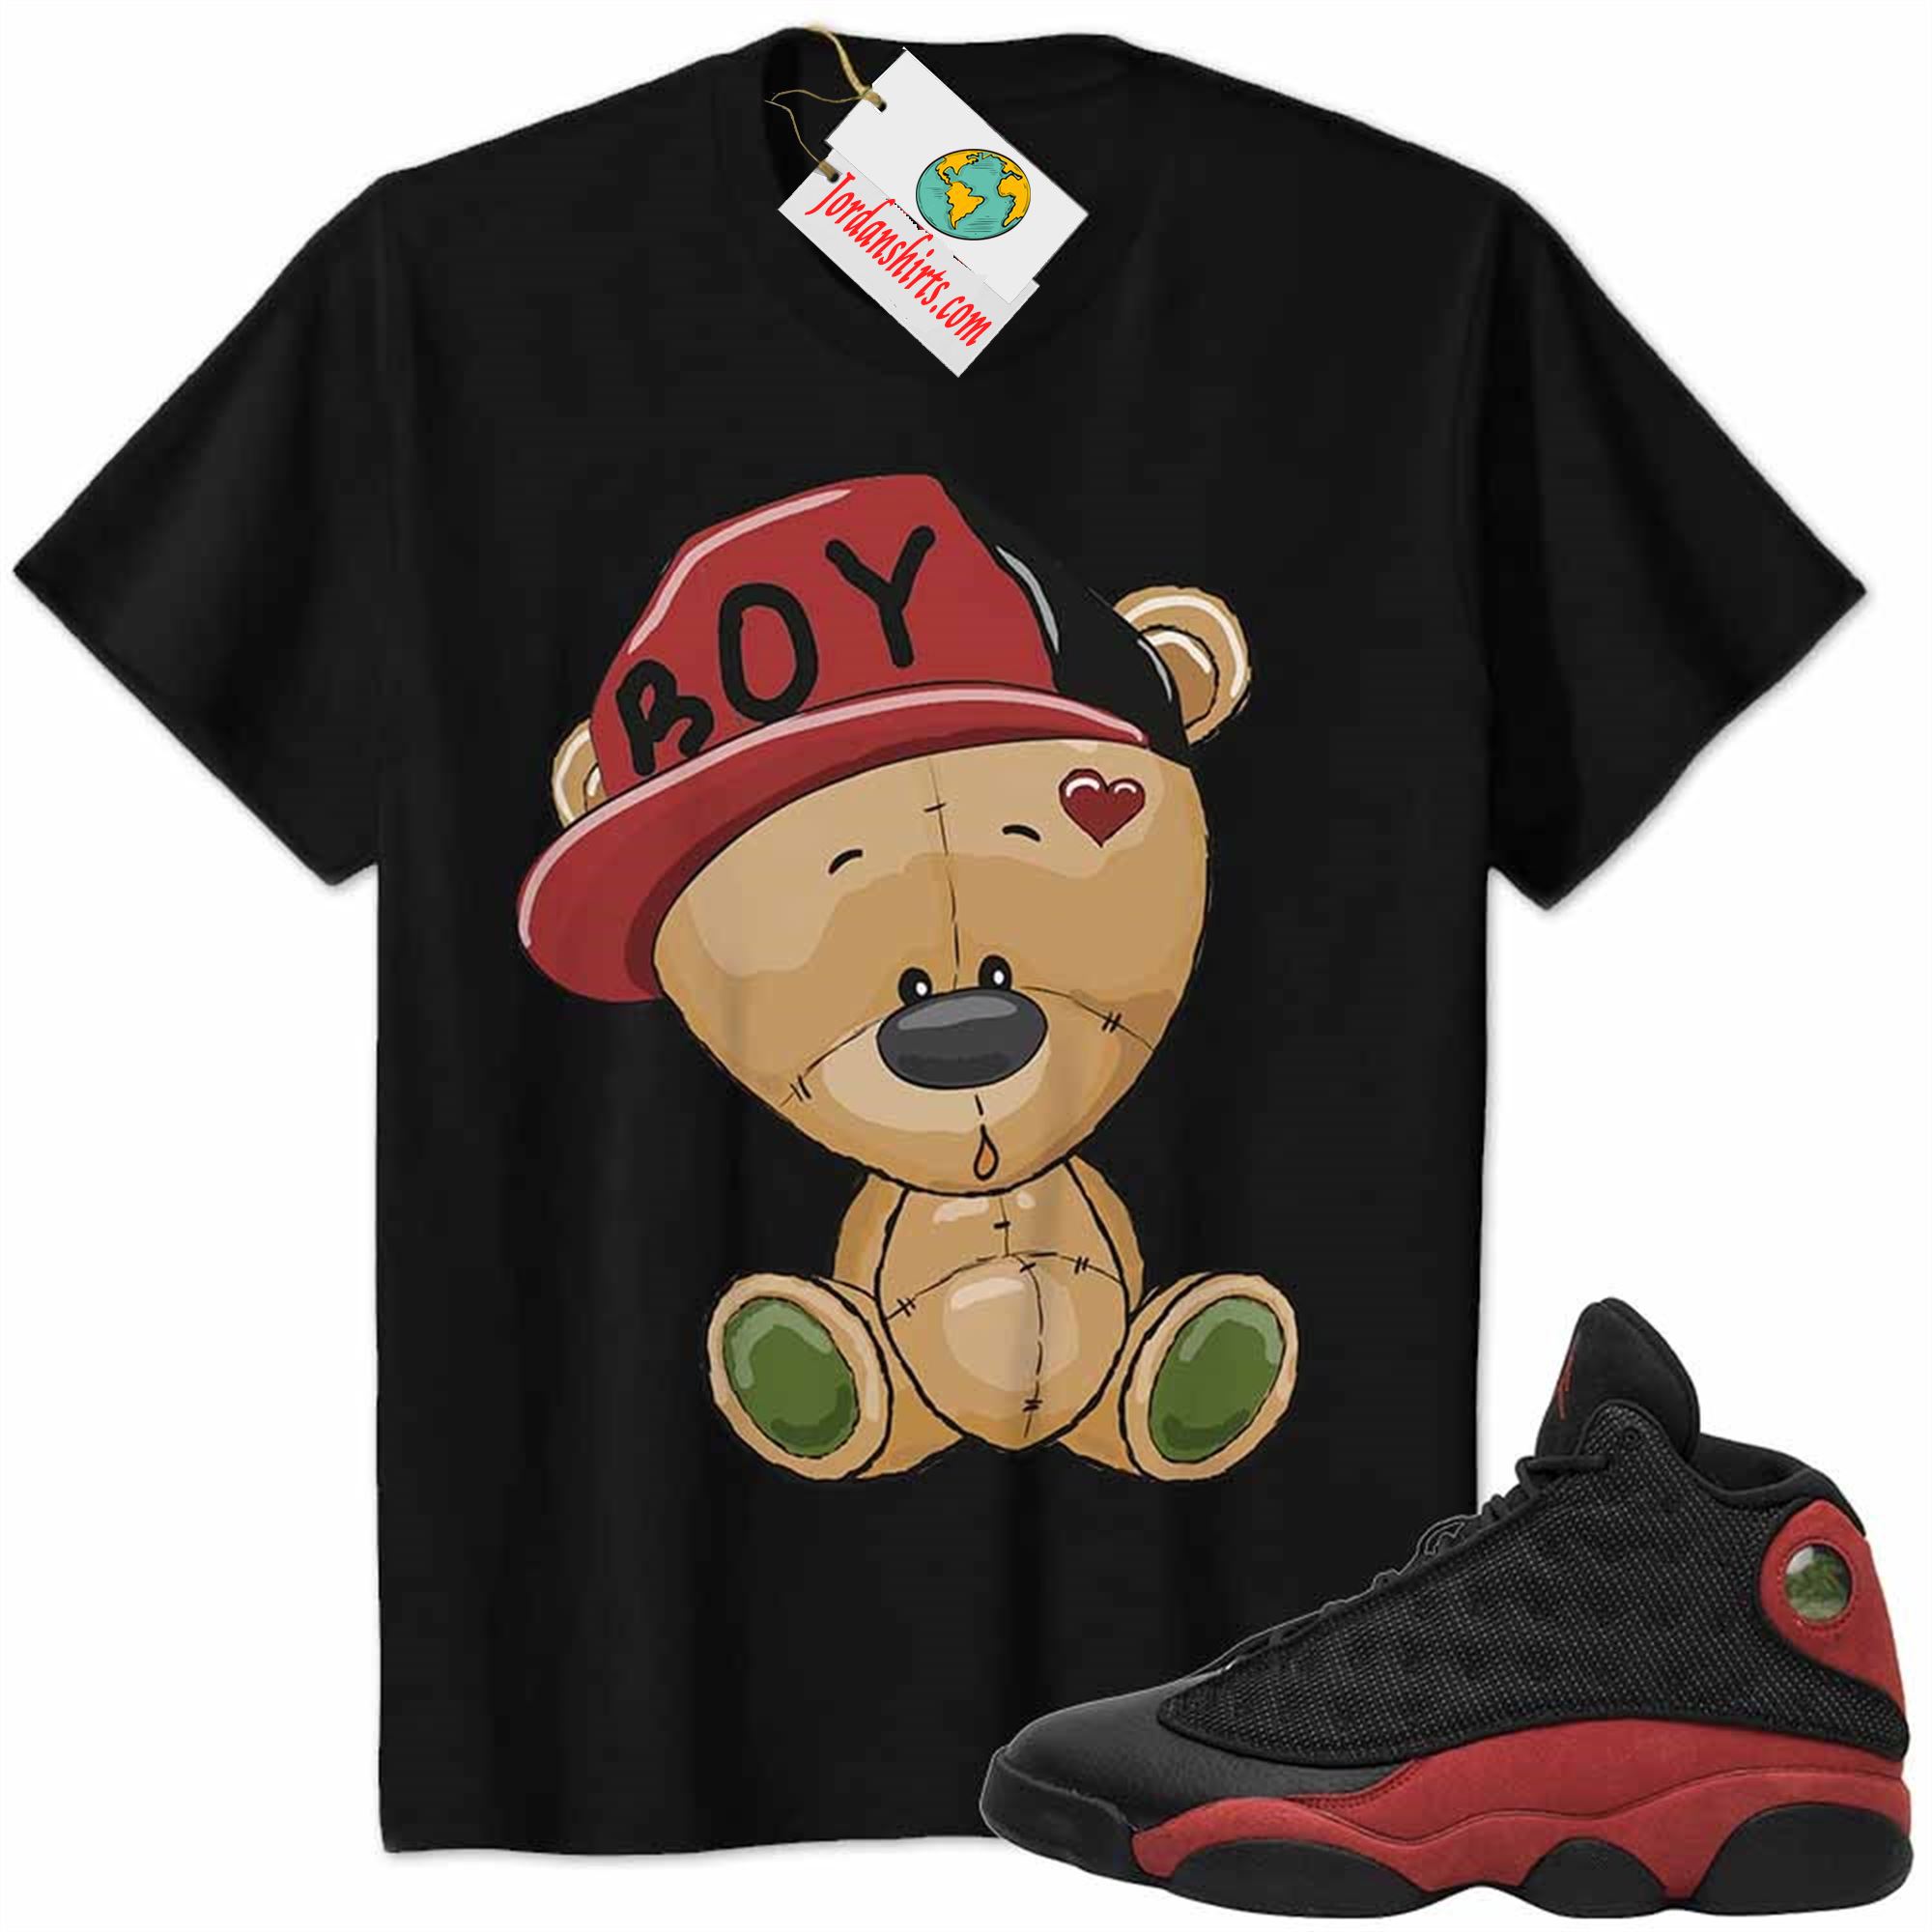 Jordan 13 Shirt, Jordan 13 Bred Shirt Cute Baby Teddy Bear Black Full Size Up To 5xl